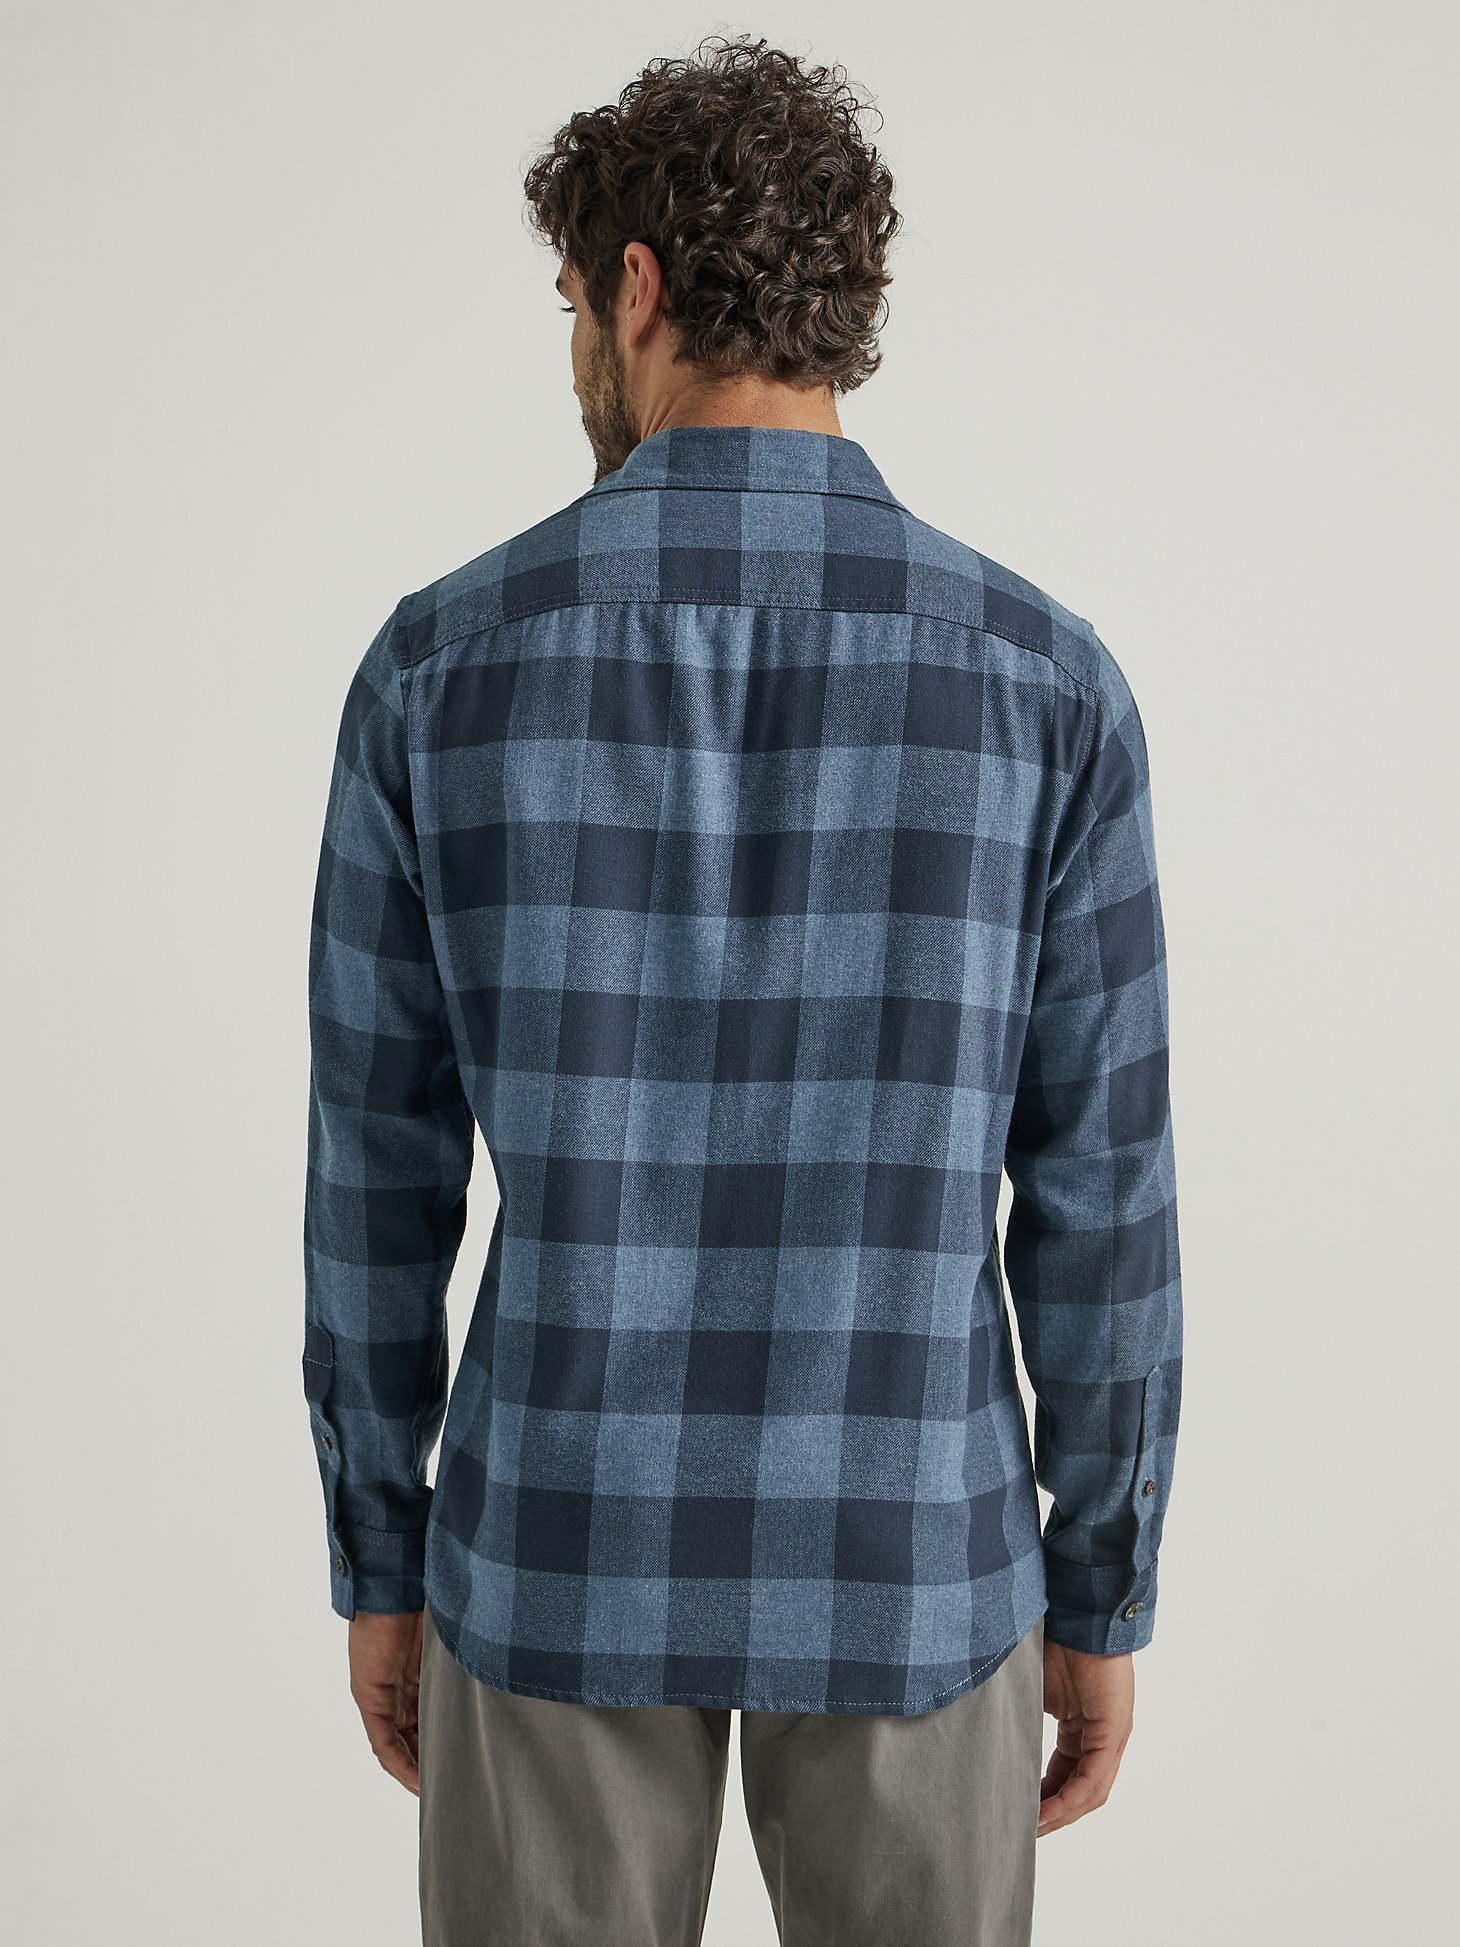 Men's Wrangler® Flannel Plaid Shirt in Sargasso Sea alternative view 1